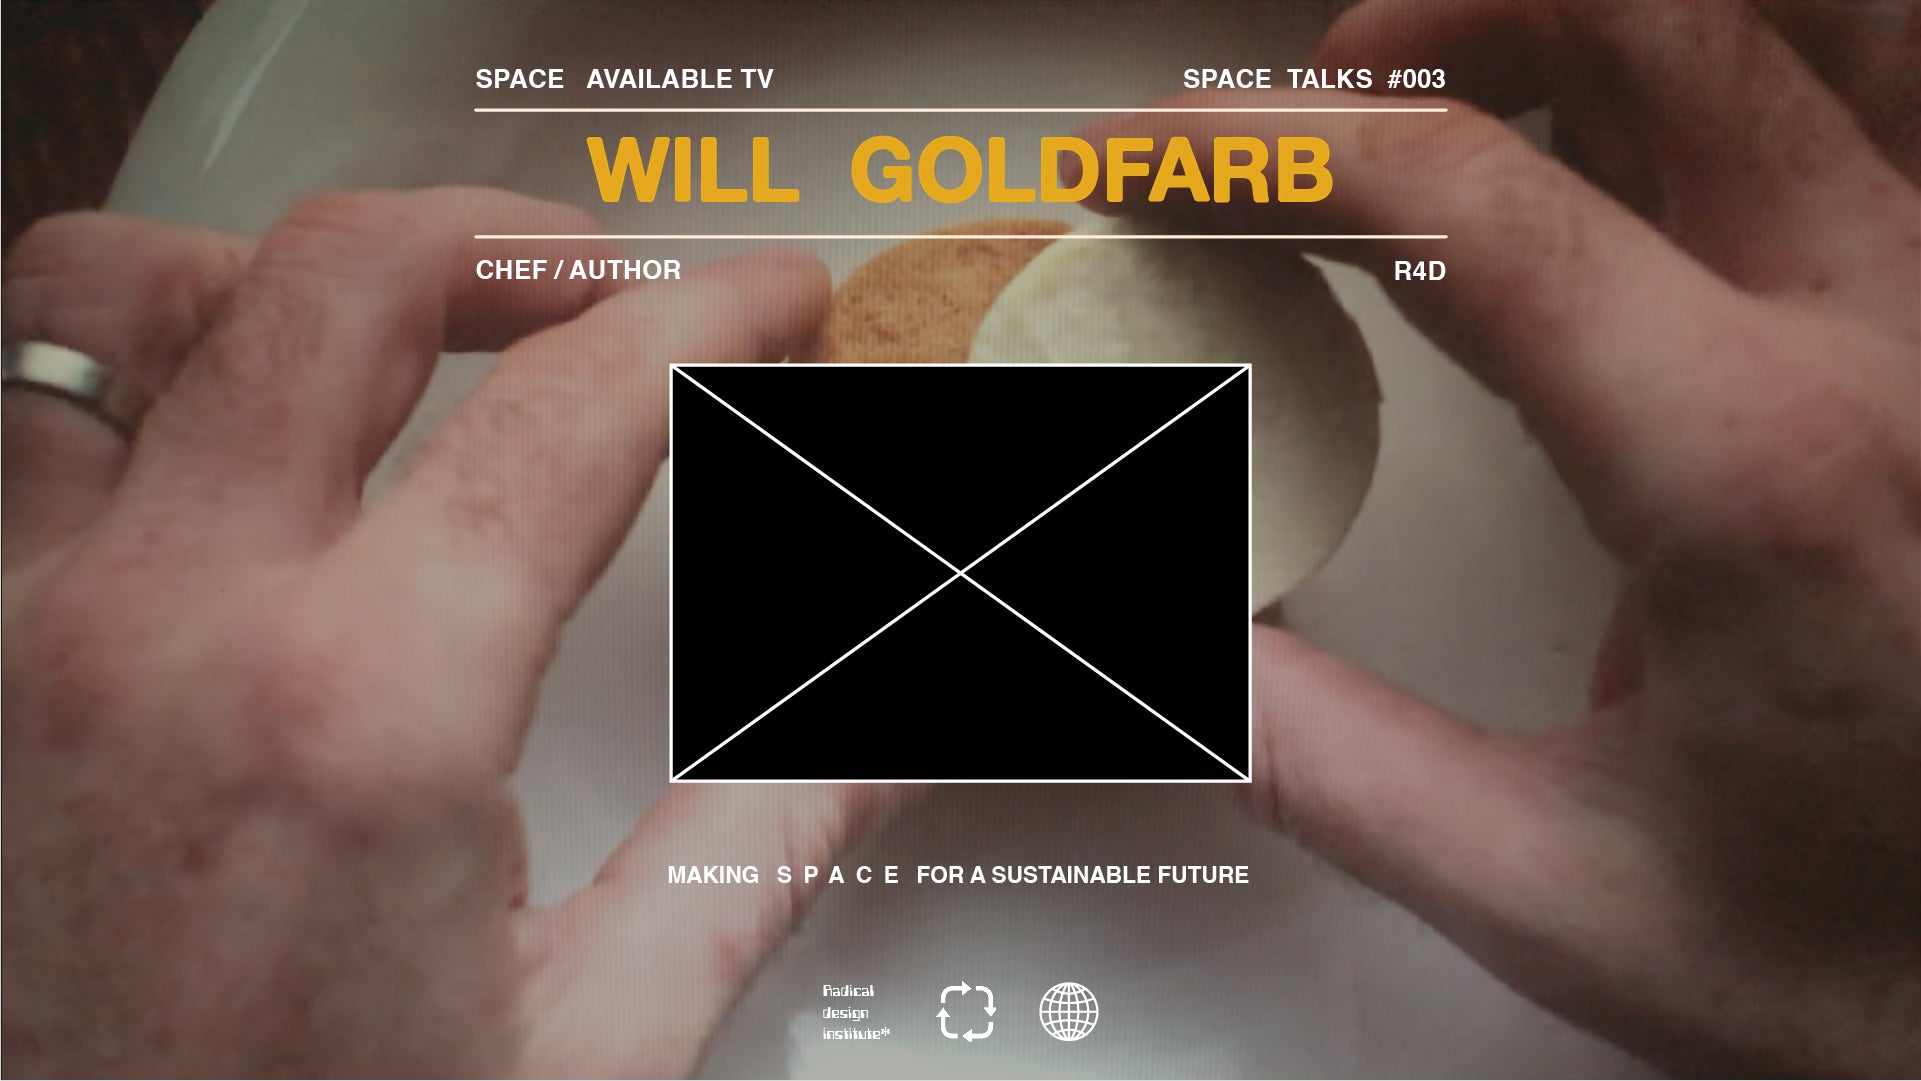 Will Goldfarb